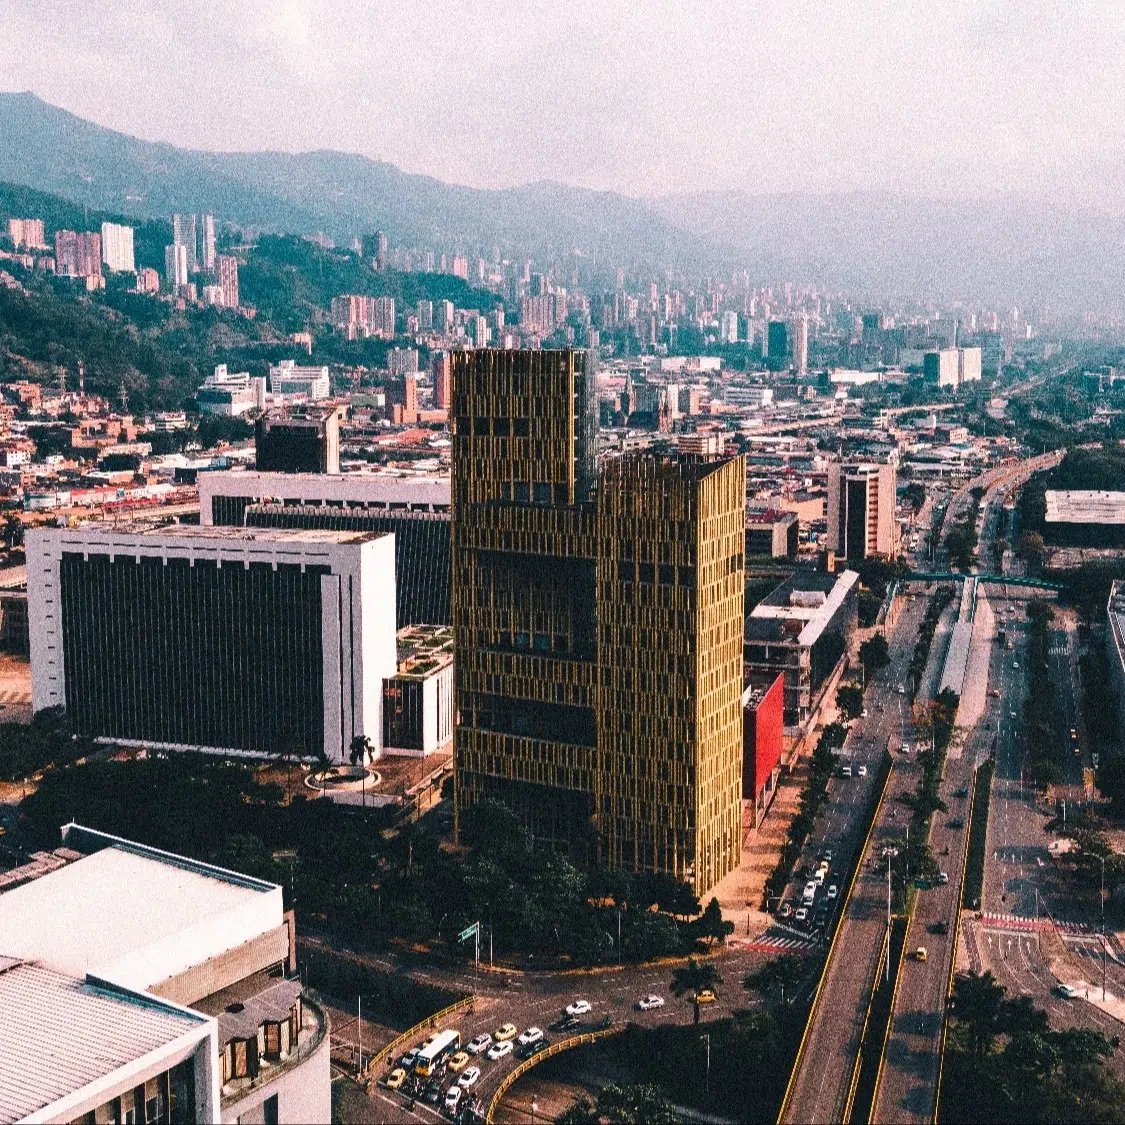 Cityscape of Medellin, as seen during an international entrepreneurship internship in Colombia